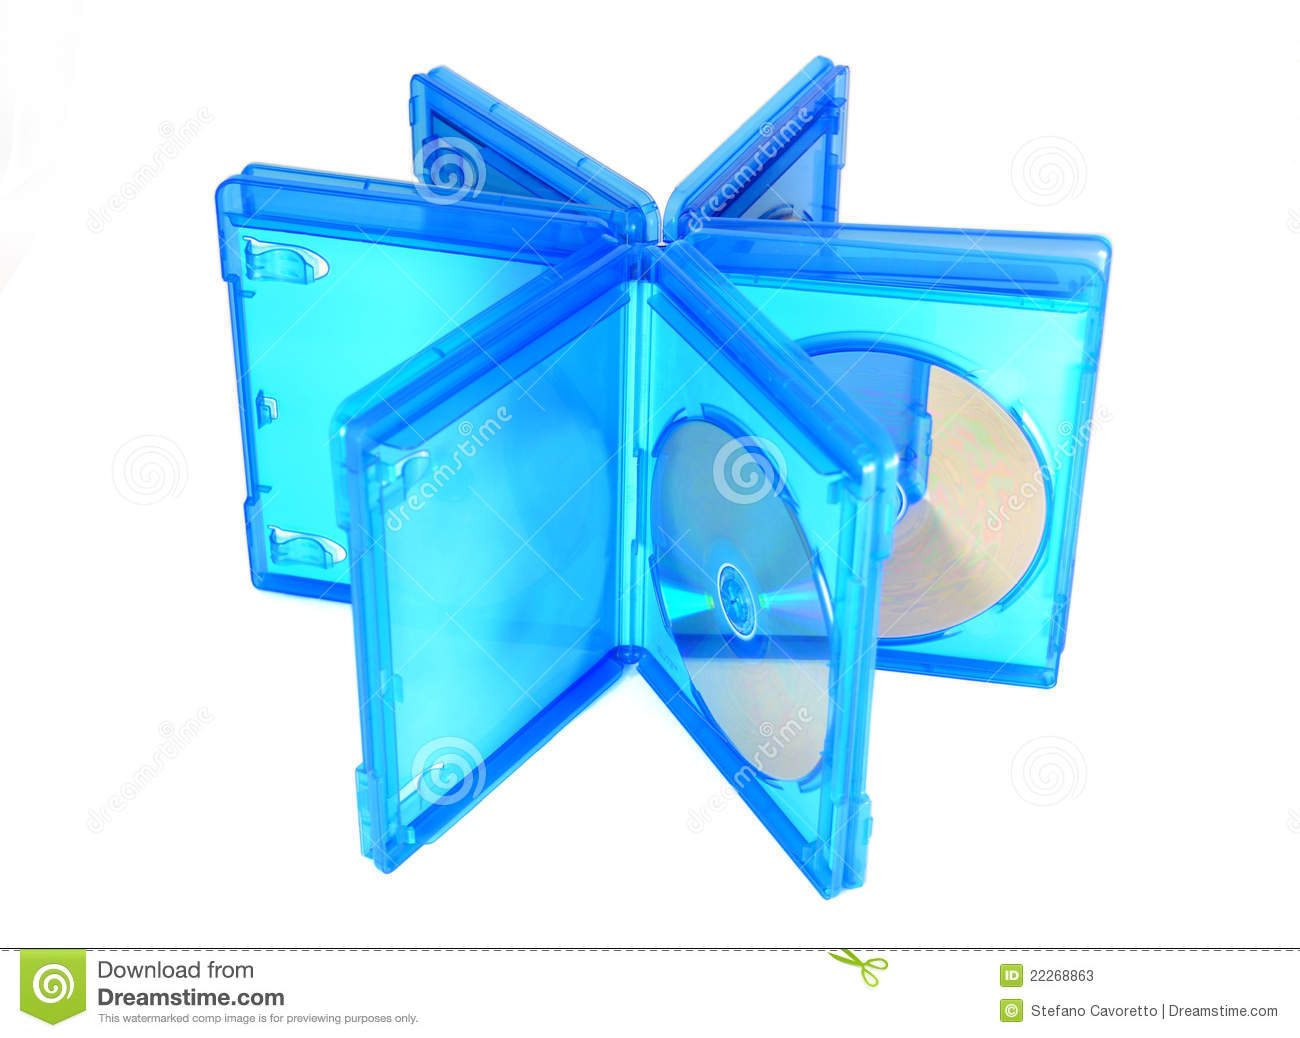 Blu Ray Disc Cases Open Stock Photos   Image  22268863